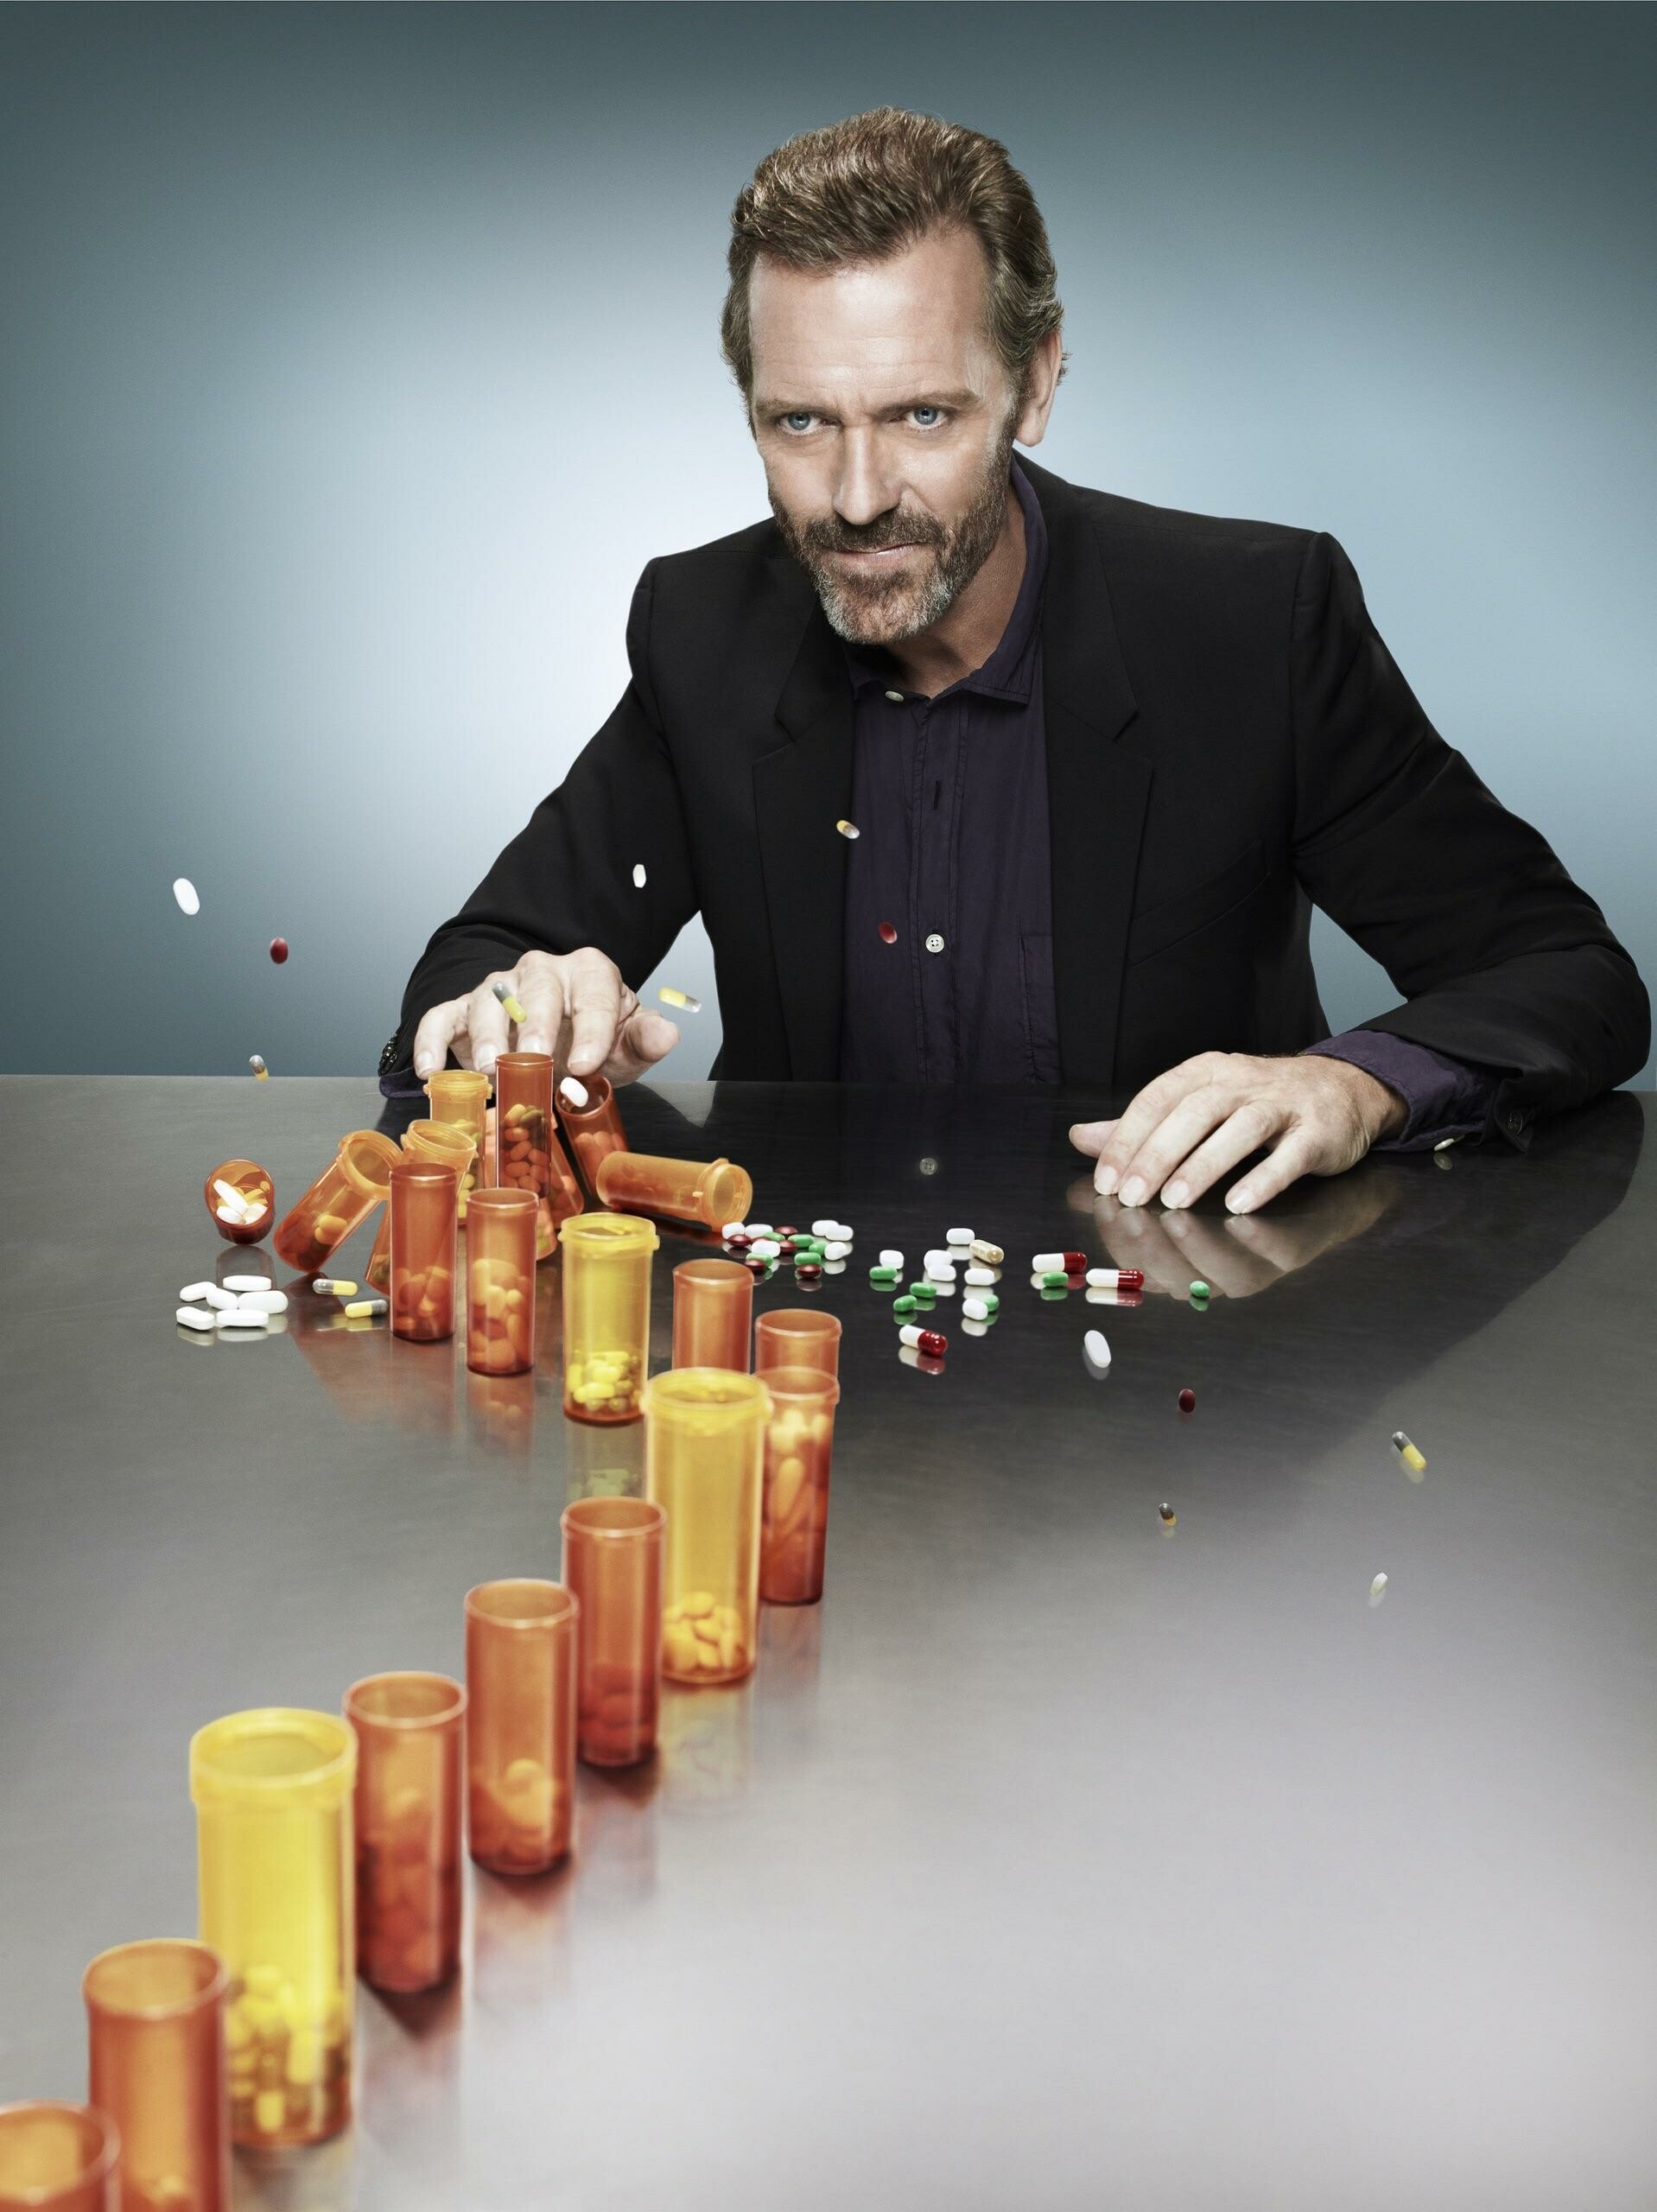 House M.D.: Hugh Laurie as an unconventional, misanthropic medical genius, Vicodin. 1920x2560 HD Wallpaper.